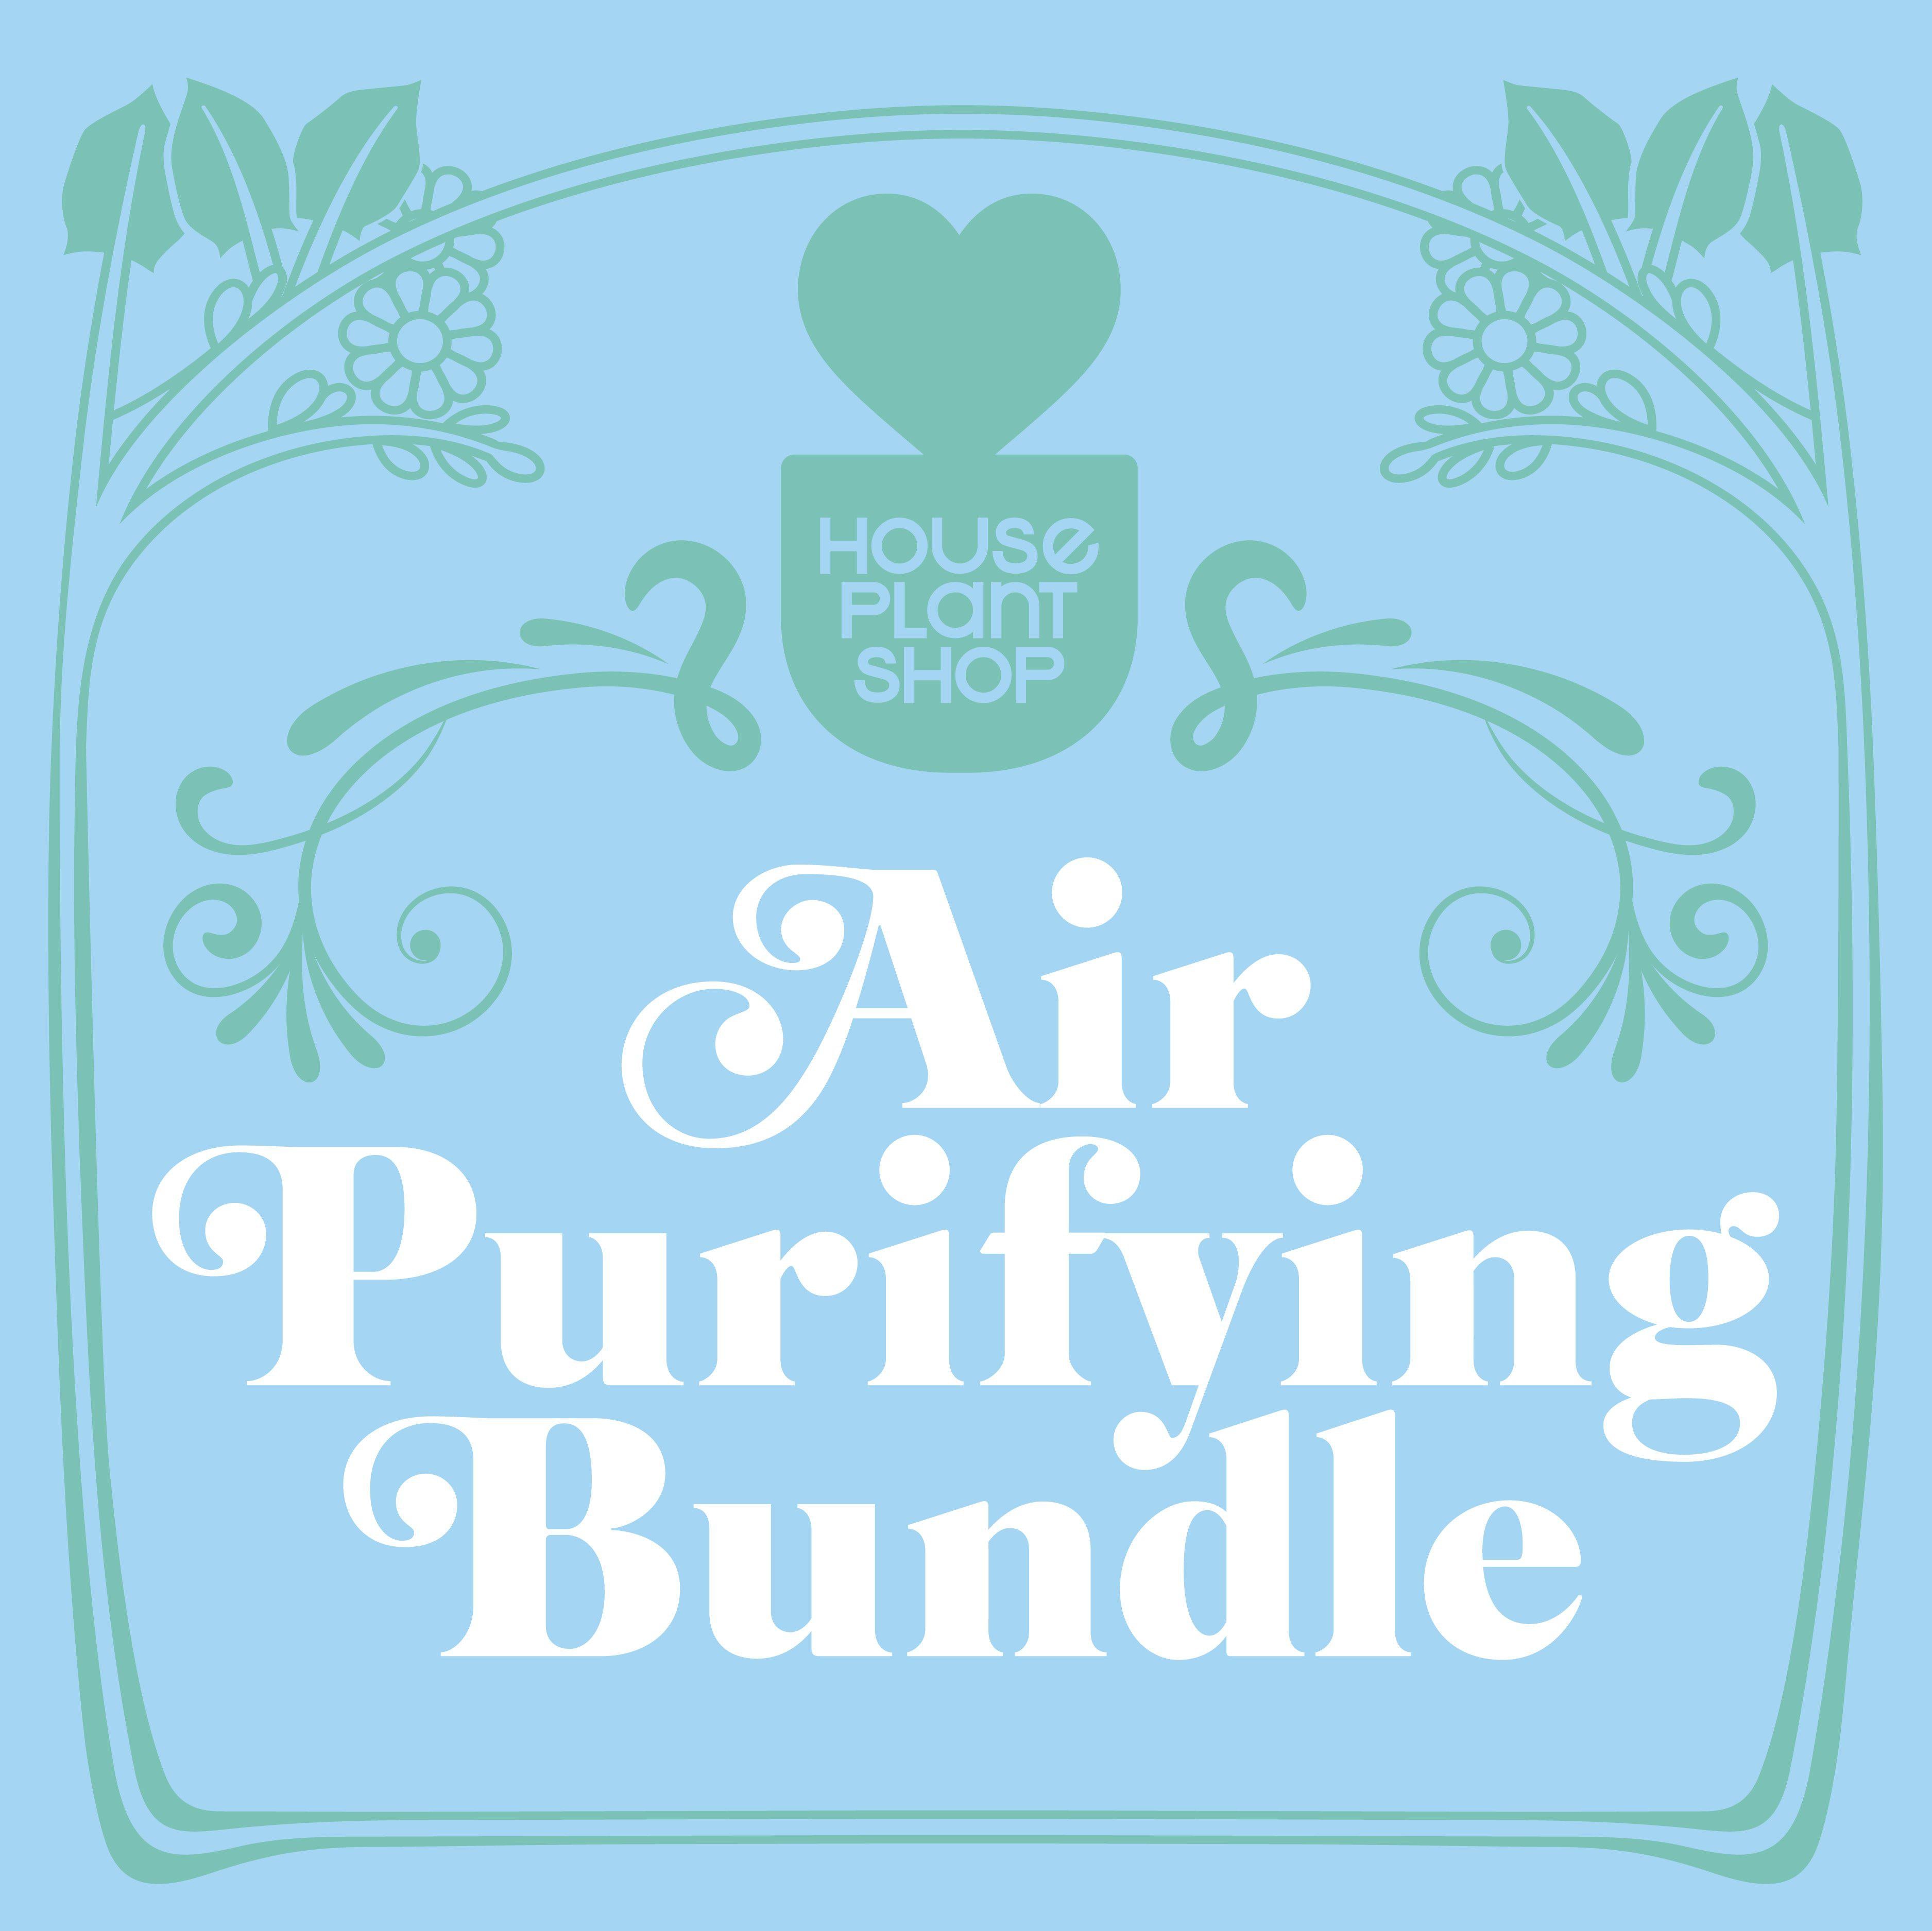 Air purifying bundle